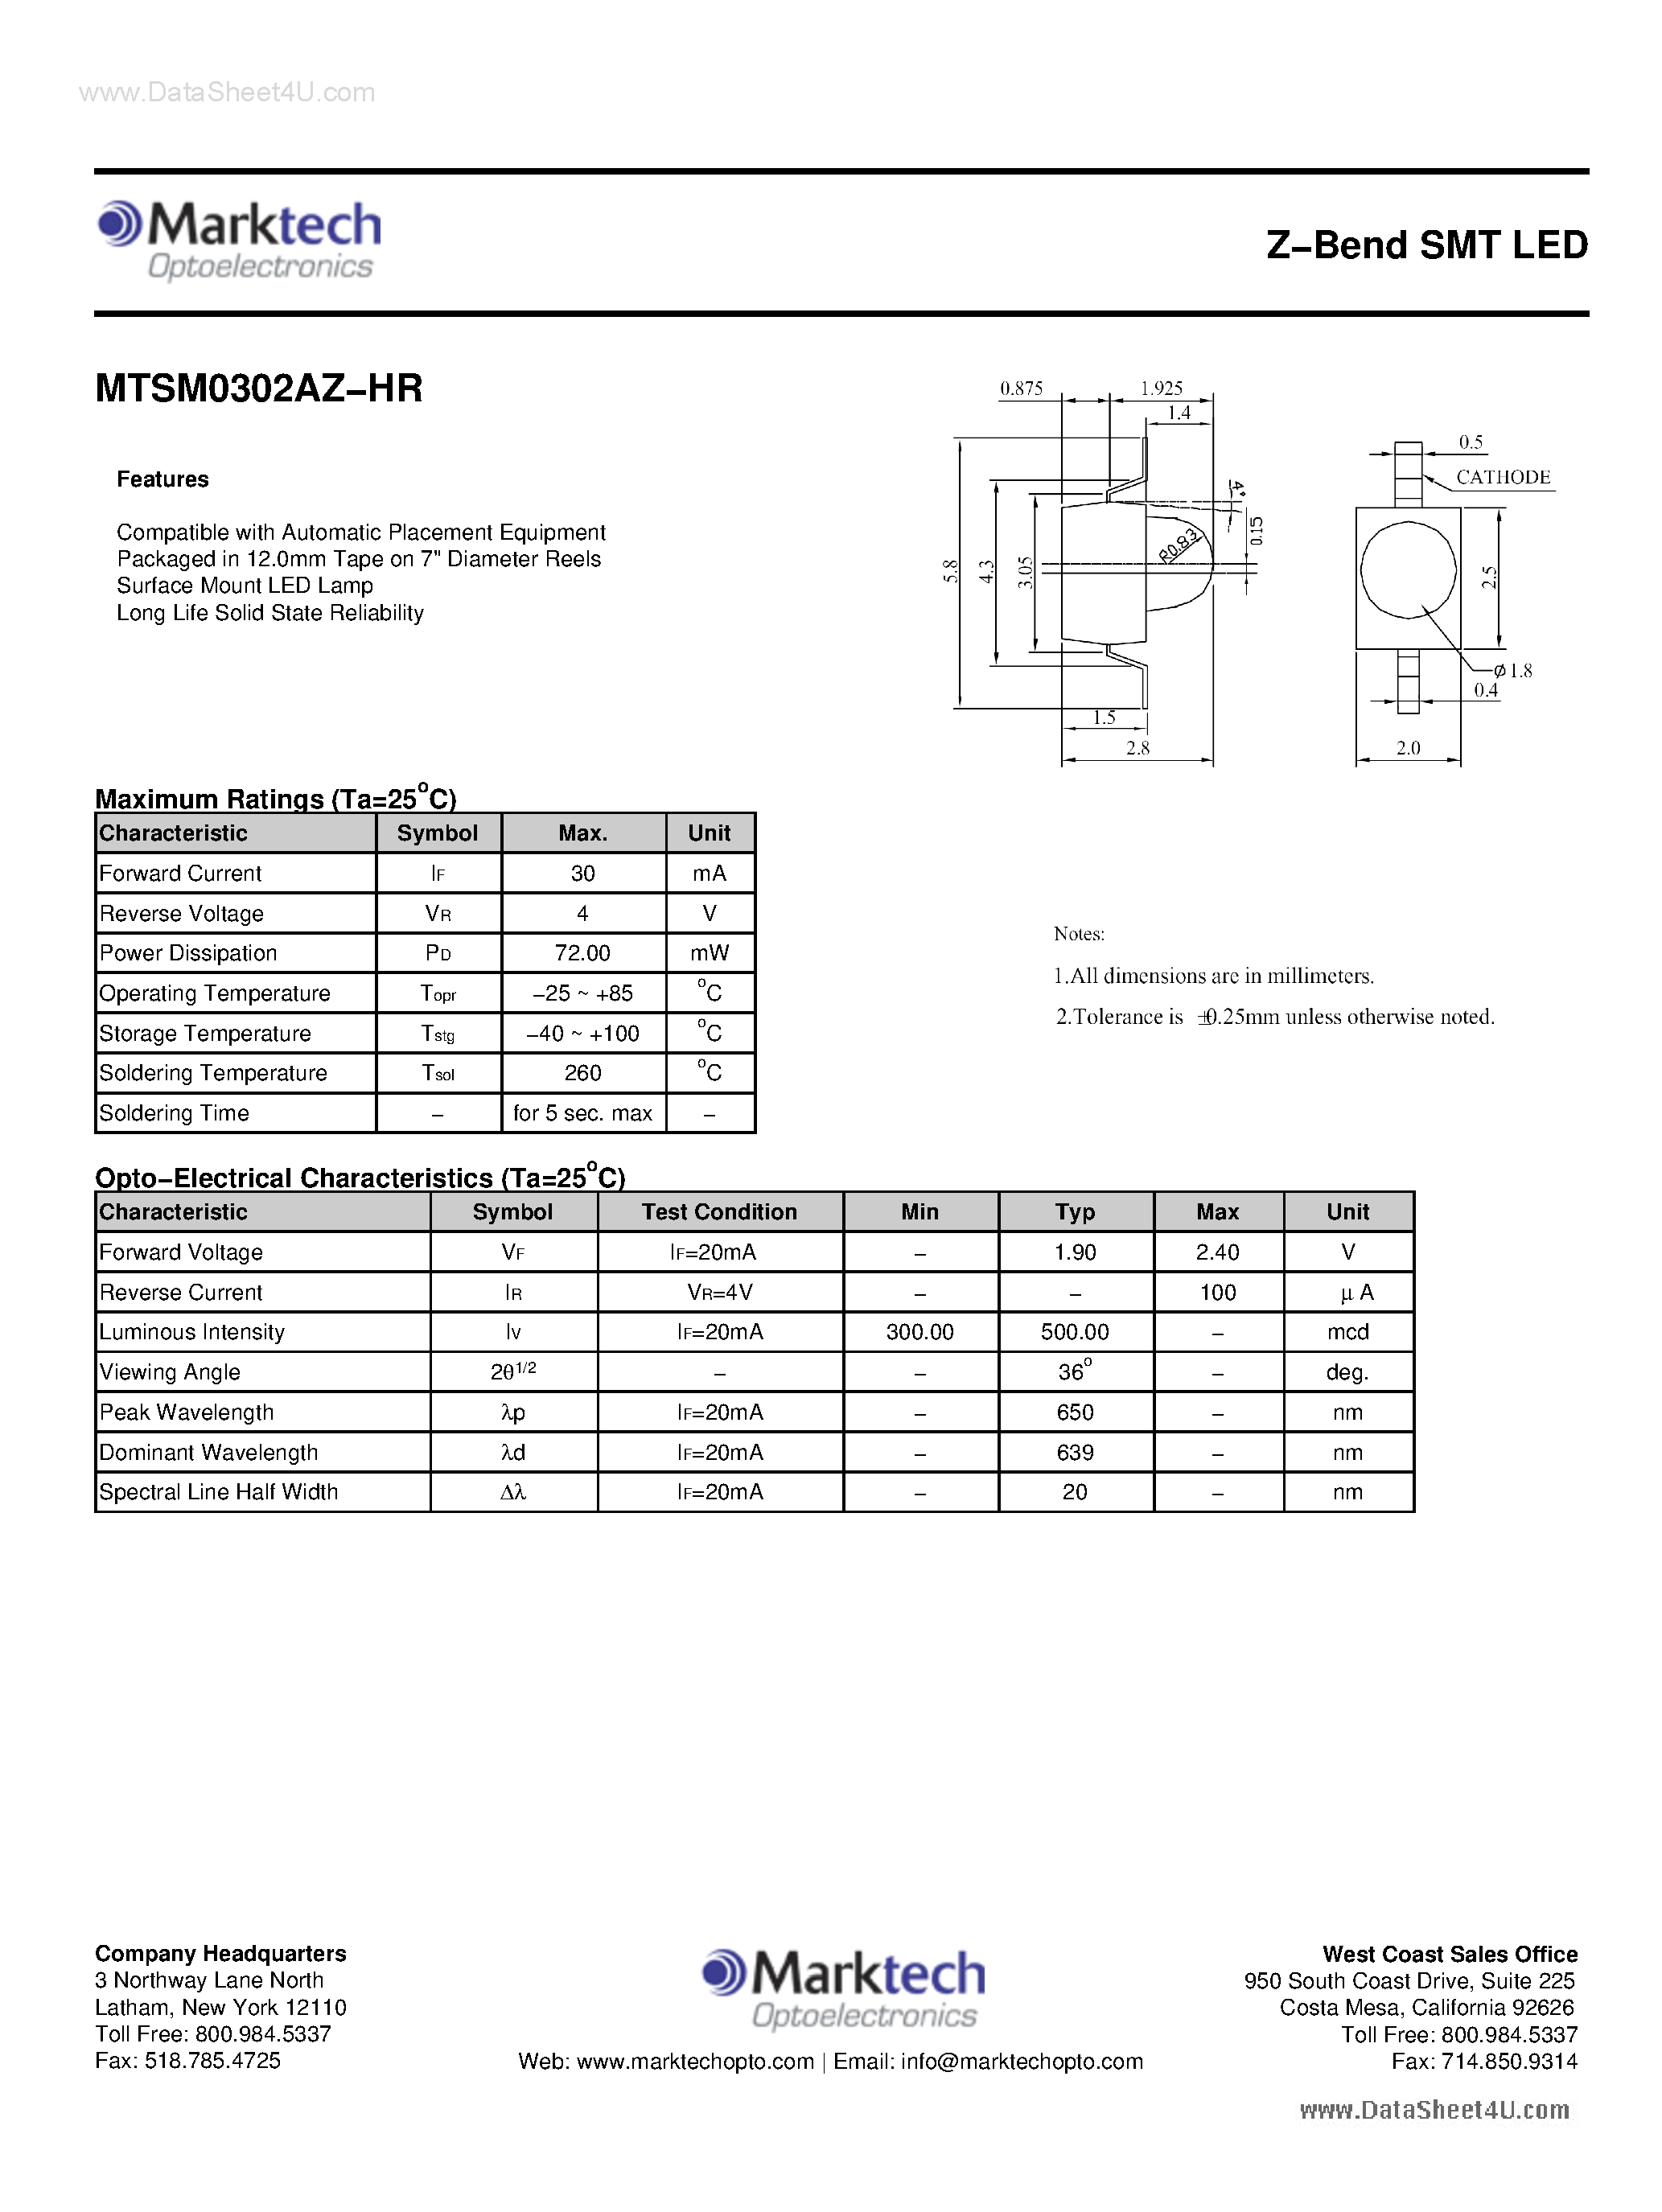 Datasheet MTSM0302AZ-HR - Z-Bend SMT LED page 1